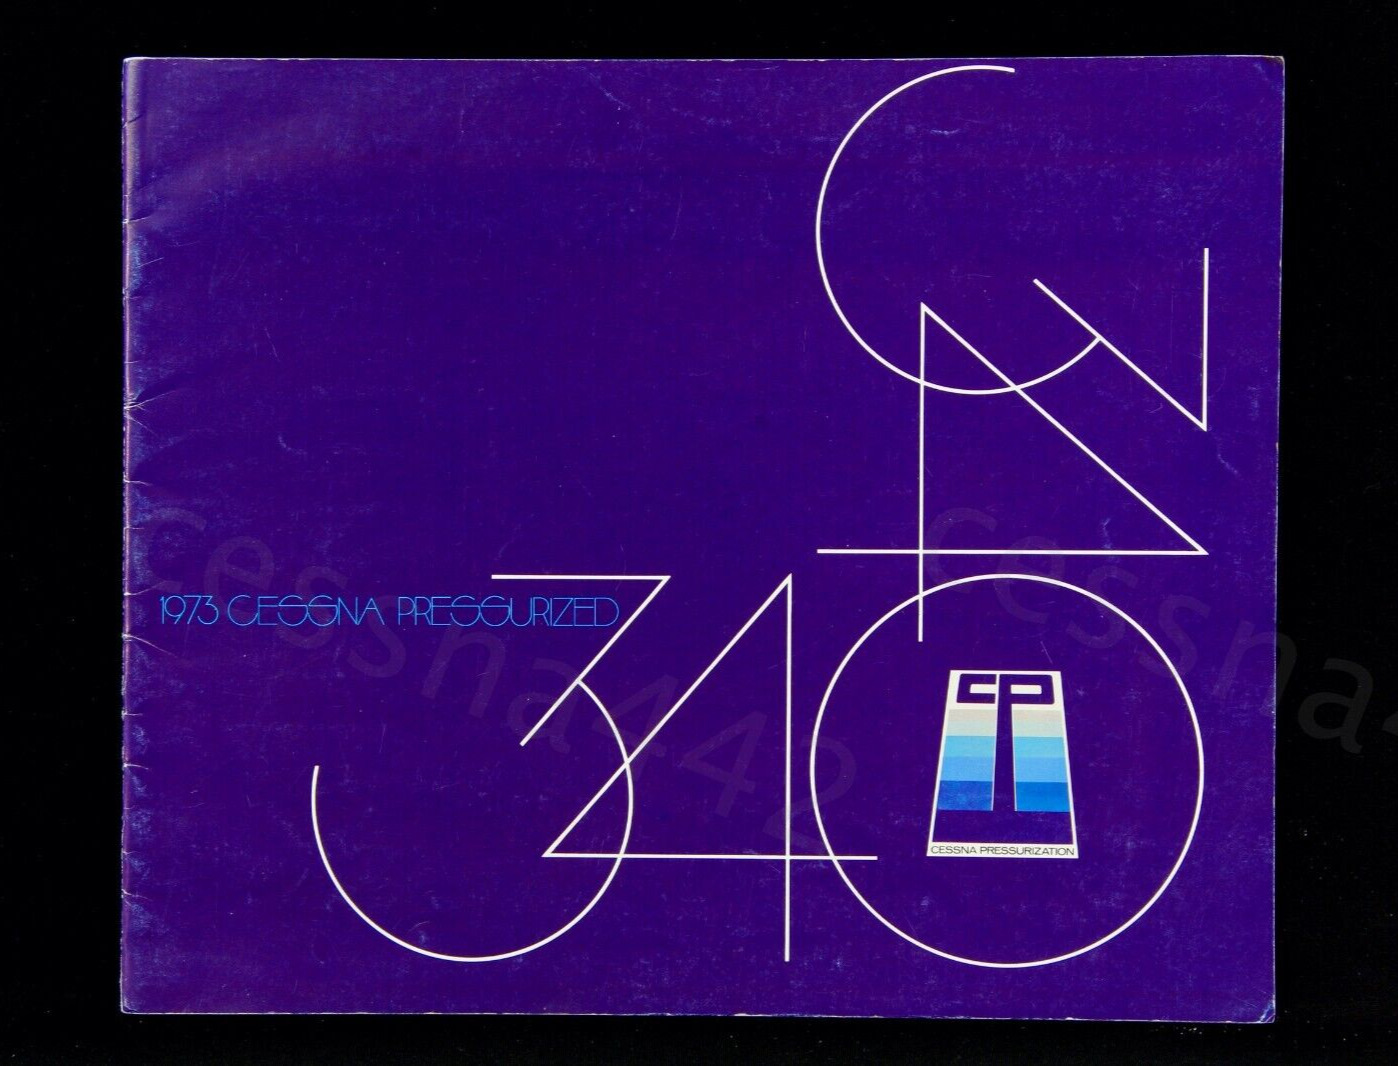 CESSNA - Factory OEM 1973 Pressurized 340 Brochure Vintage Collectable USA Gift